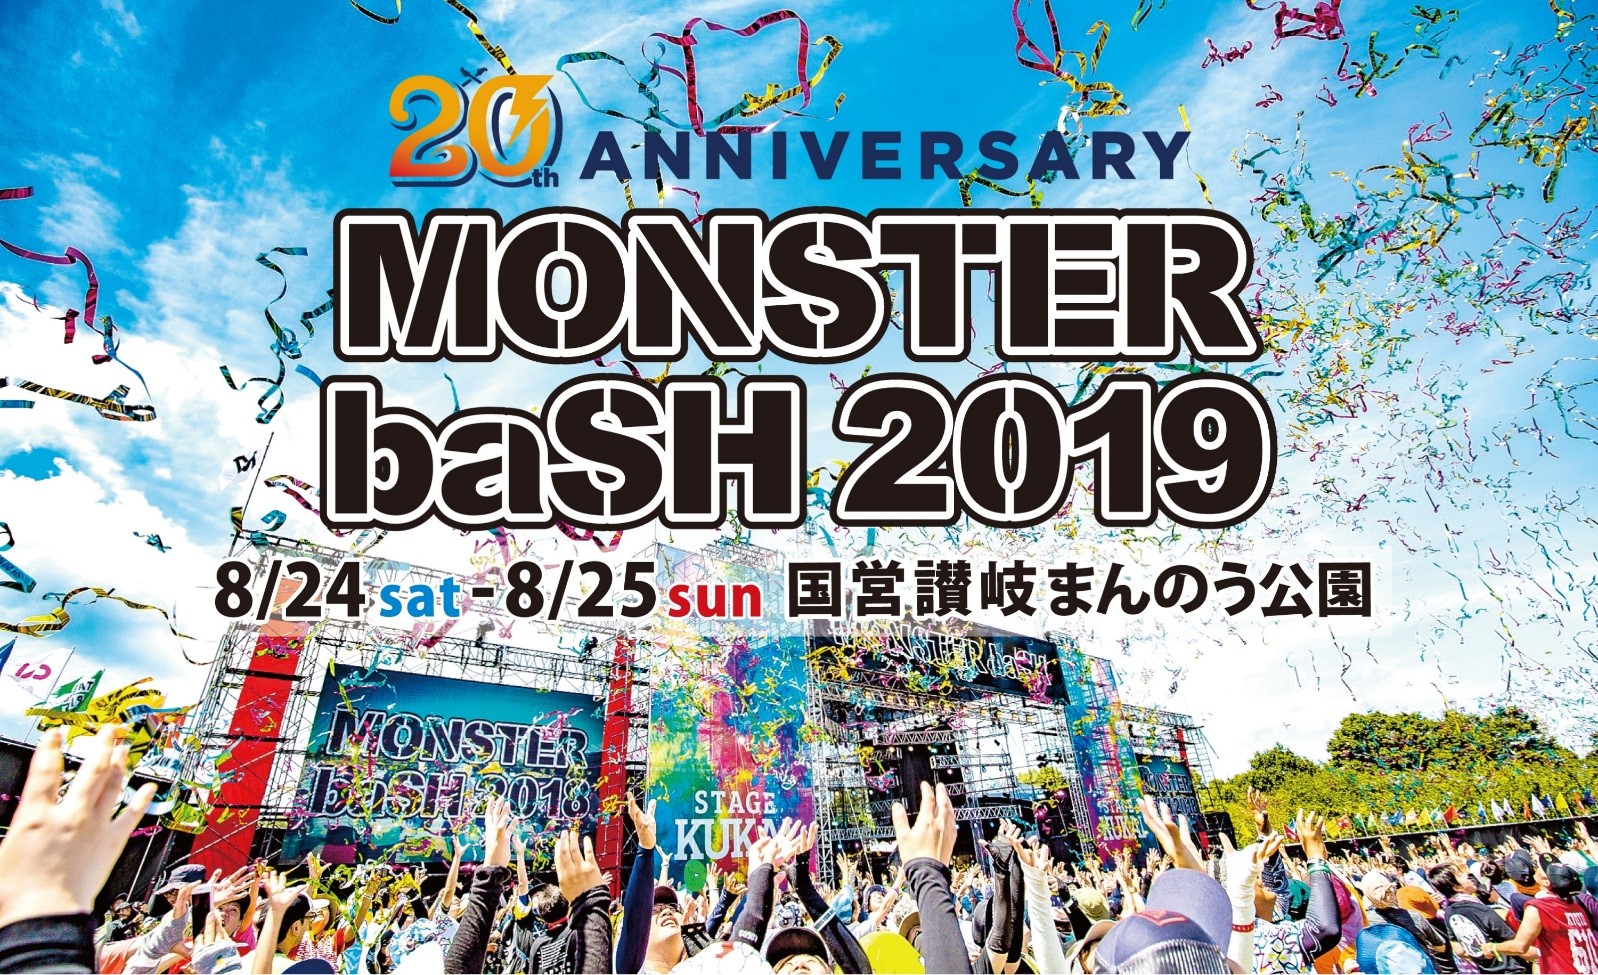 Monster Bash Tsutaya チケットプレゼントキャンペーン四国 岡山 広島 エリア限定で実施中 カルチュア コンビニエンス クラブ株式会社のプレスリリース